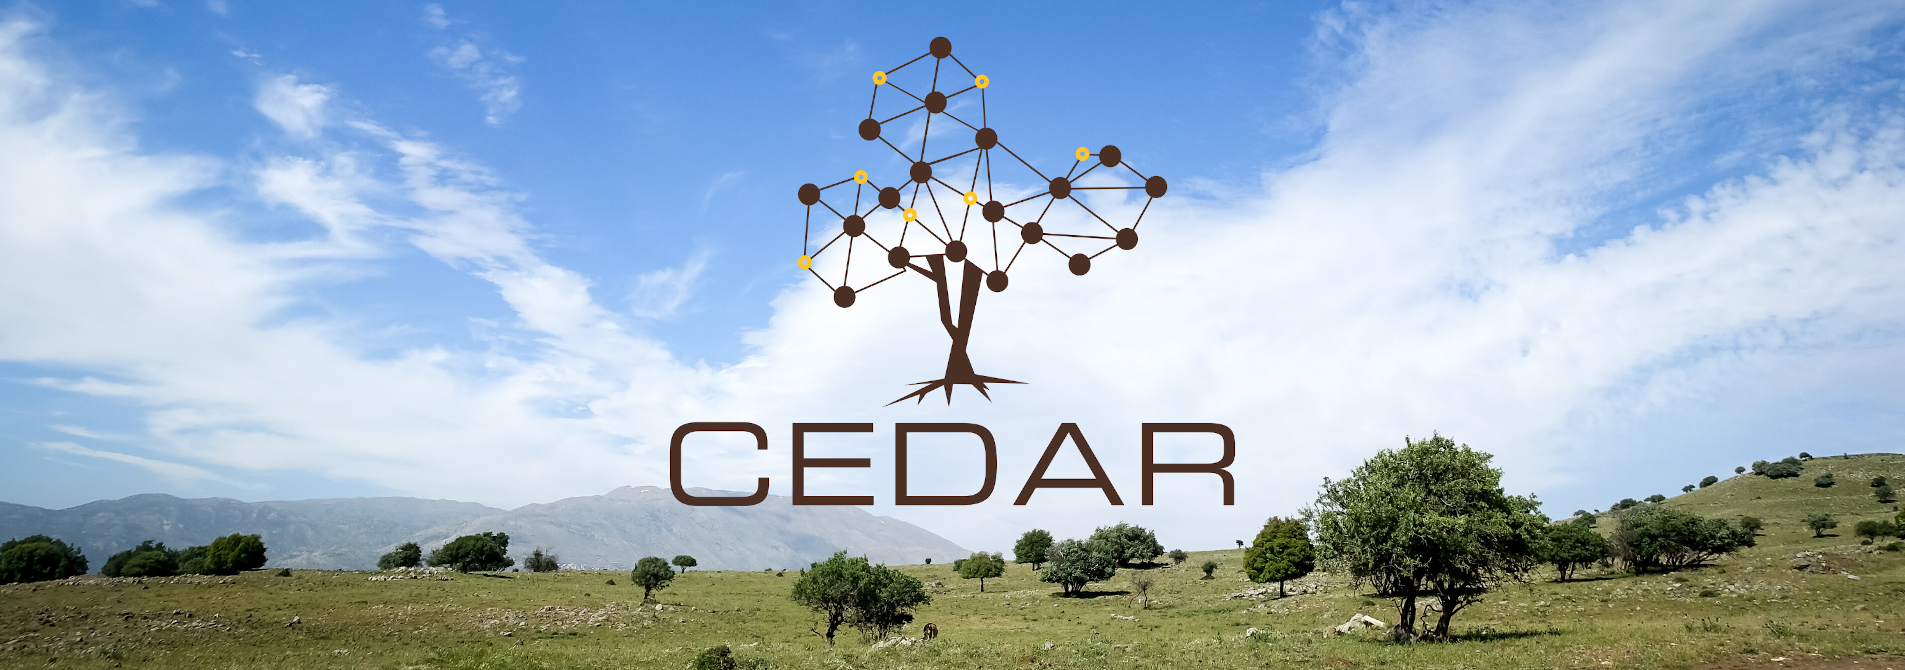 CEDAR banner logo